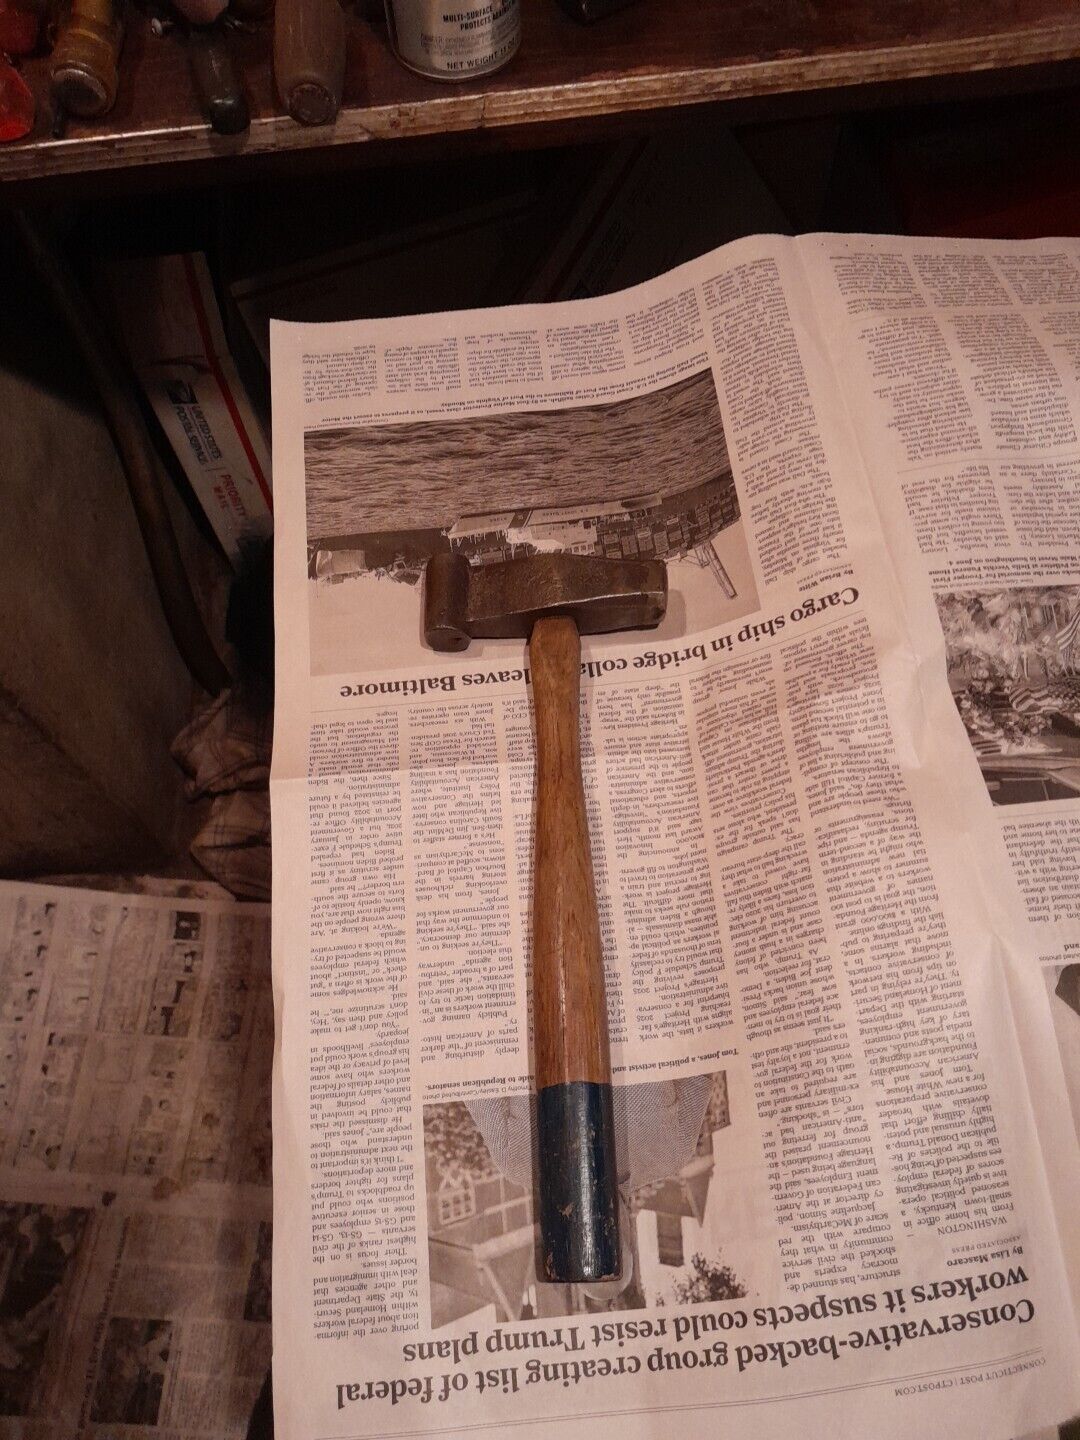 Vintage Blacksmith Straight Peen Hammer